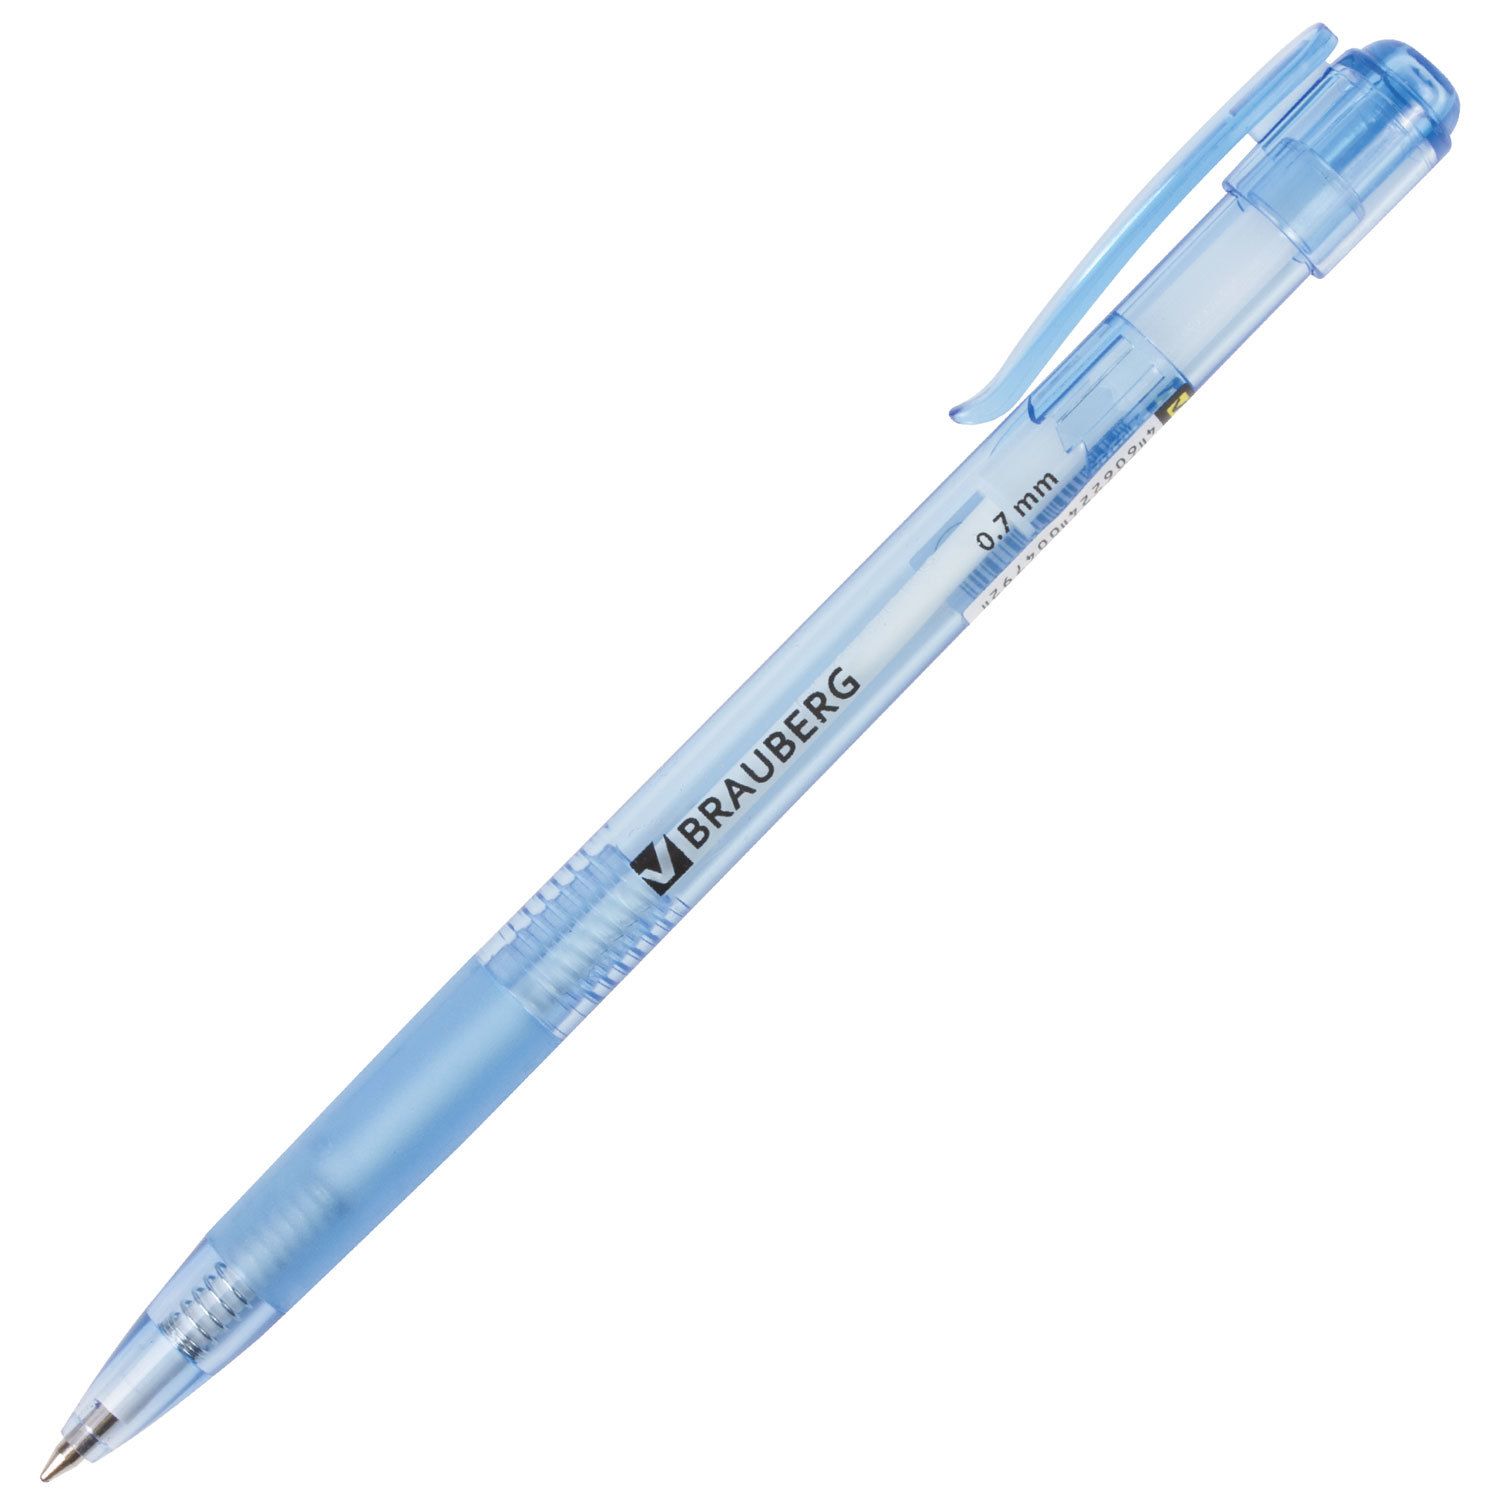 Brauberg 0.7. Ручка БРАУБЕРГ 0.7. Ручка шариковая БРАУБЕРГ 0.7. Ручка шариковая синяя БРАУБЕРГ. Ручка шариковая БРАУБЕРГ 0.7 мм.